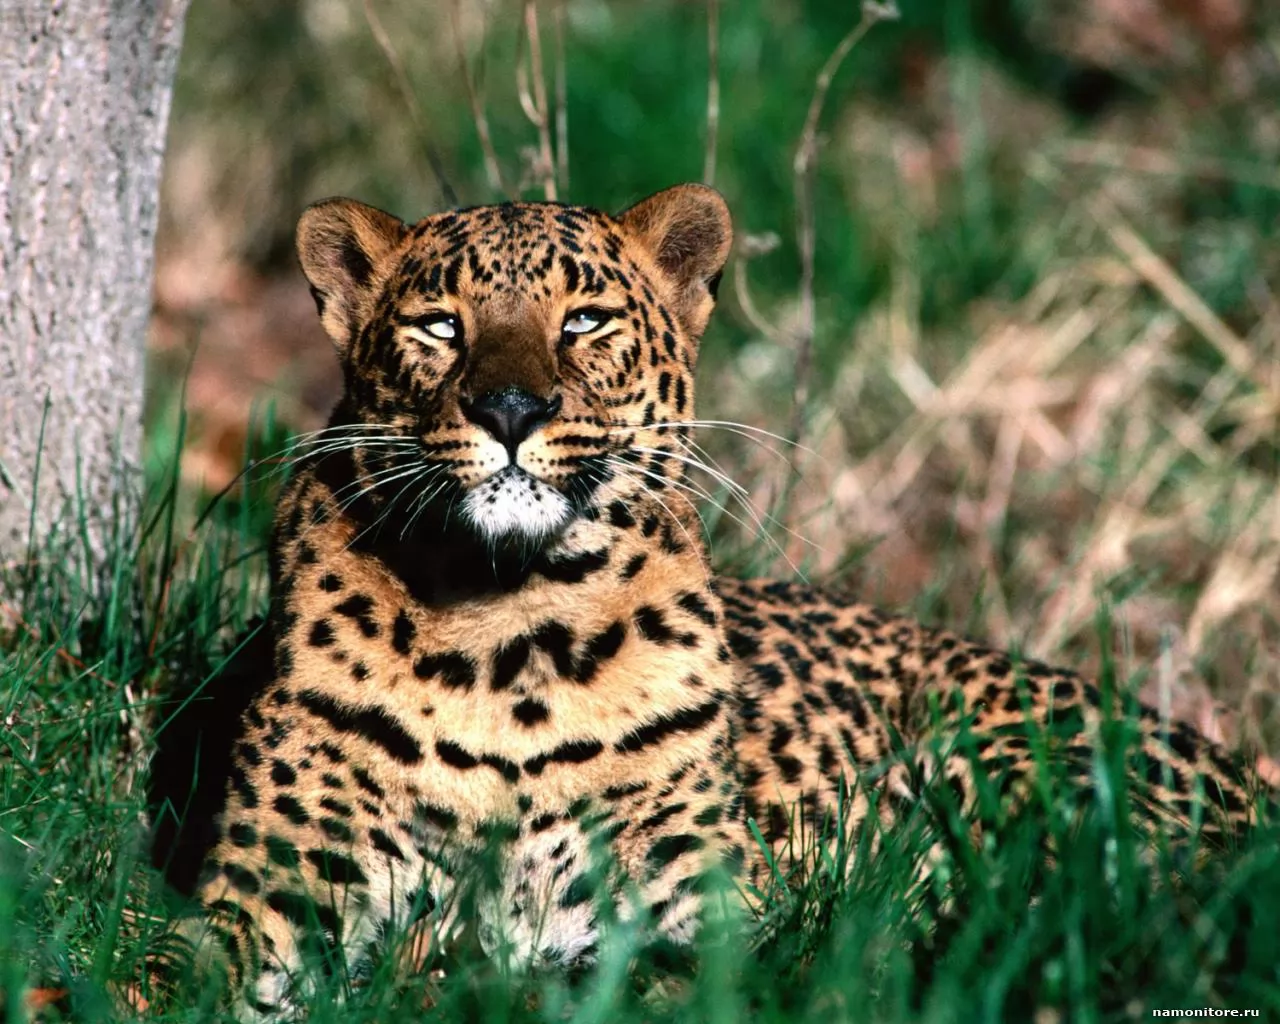 Leopard in a grass, animals, cats, grass, green, leopards, muzzle x